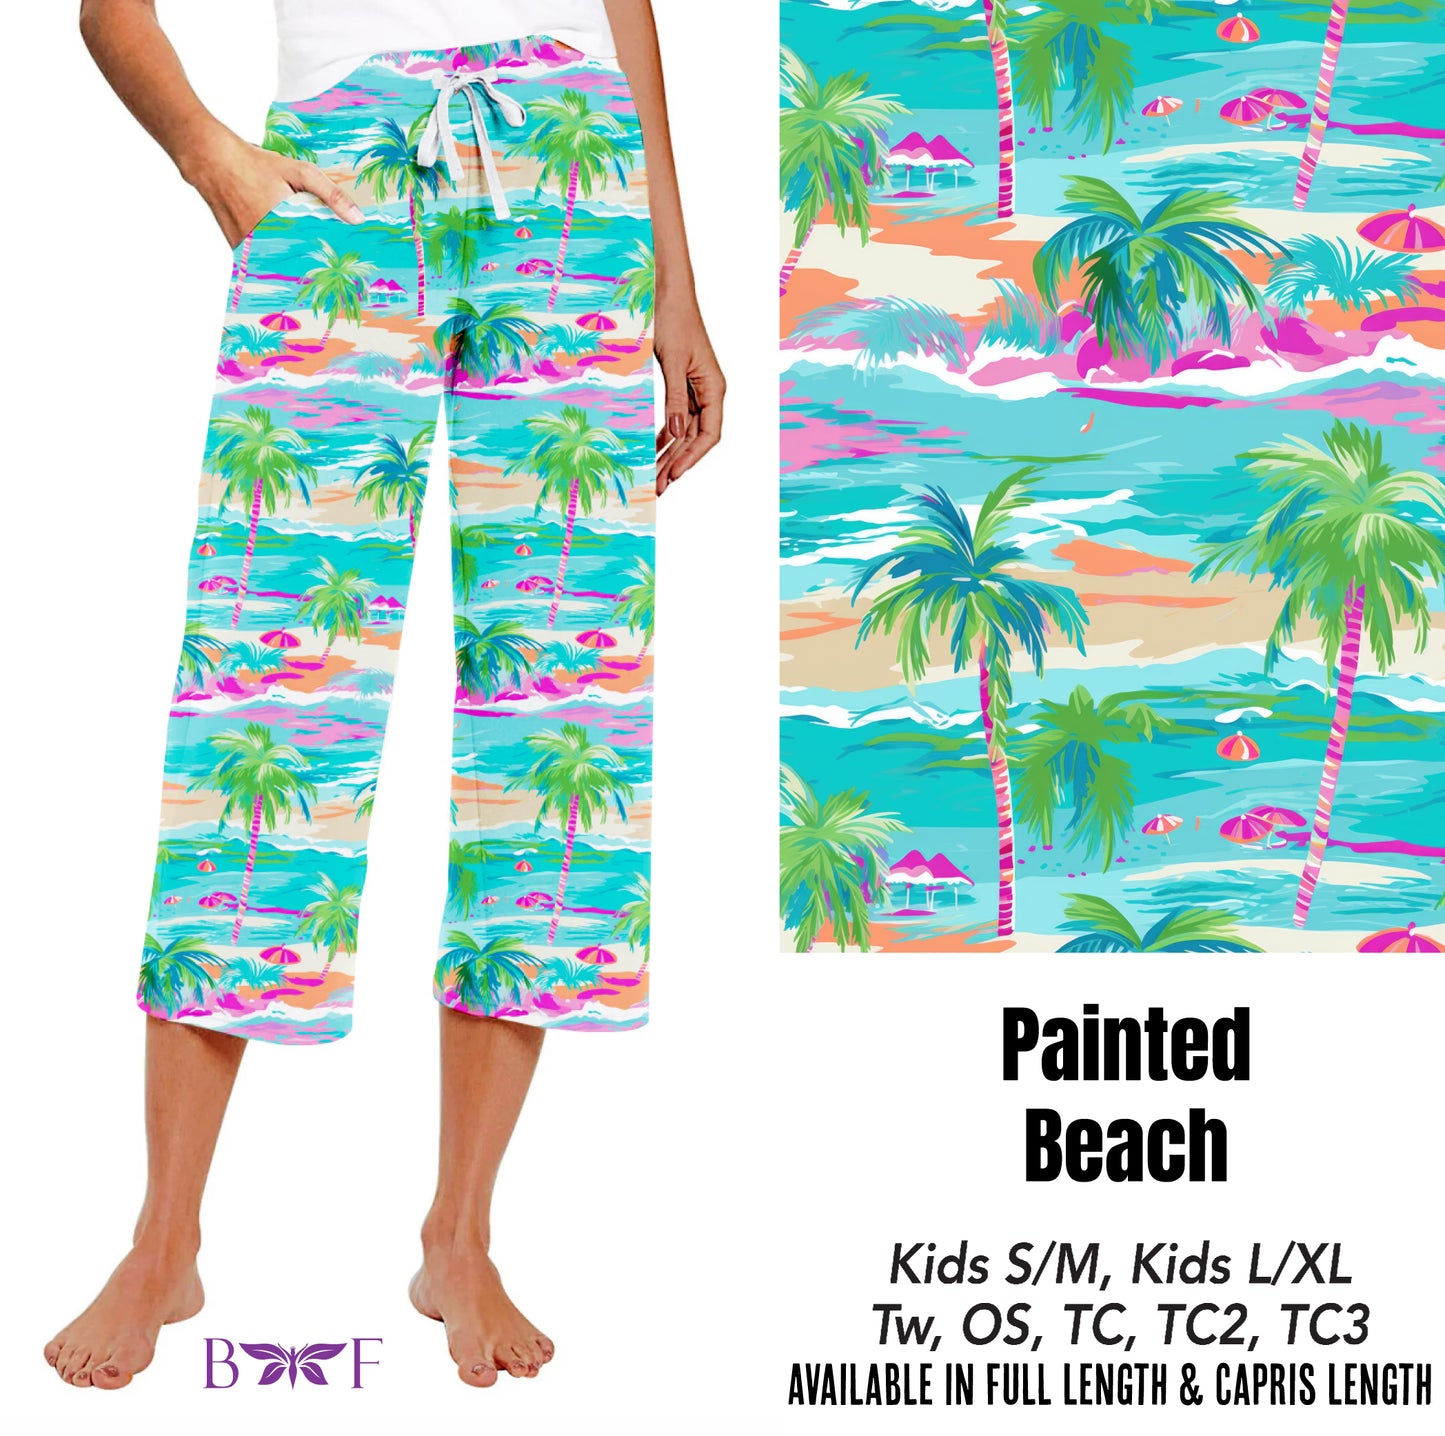 Painted beach preorder#0515